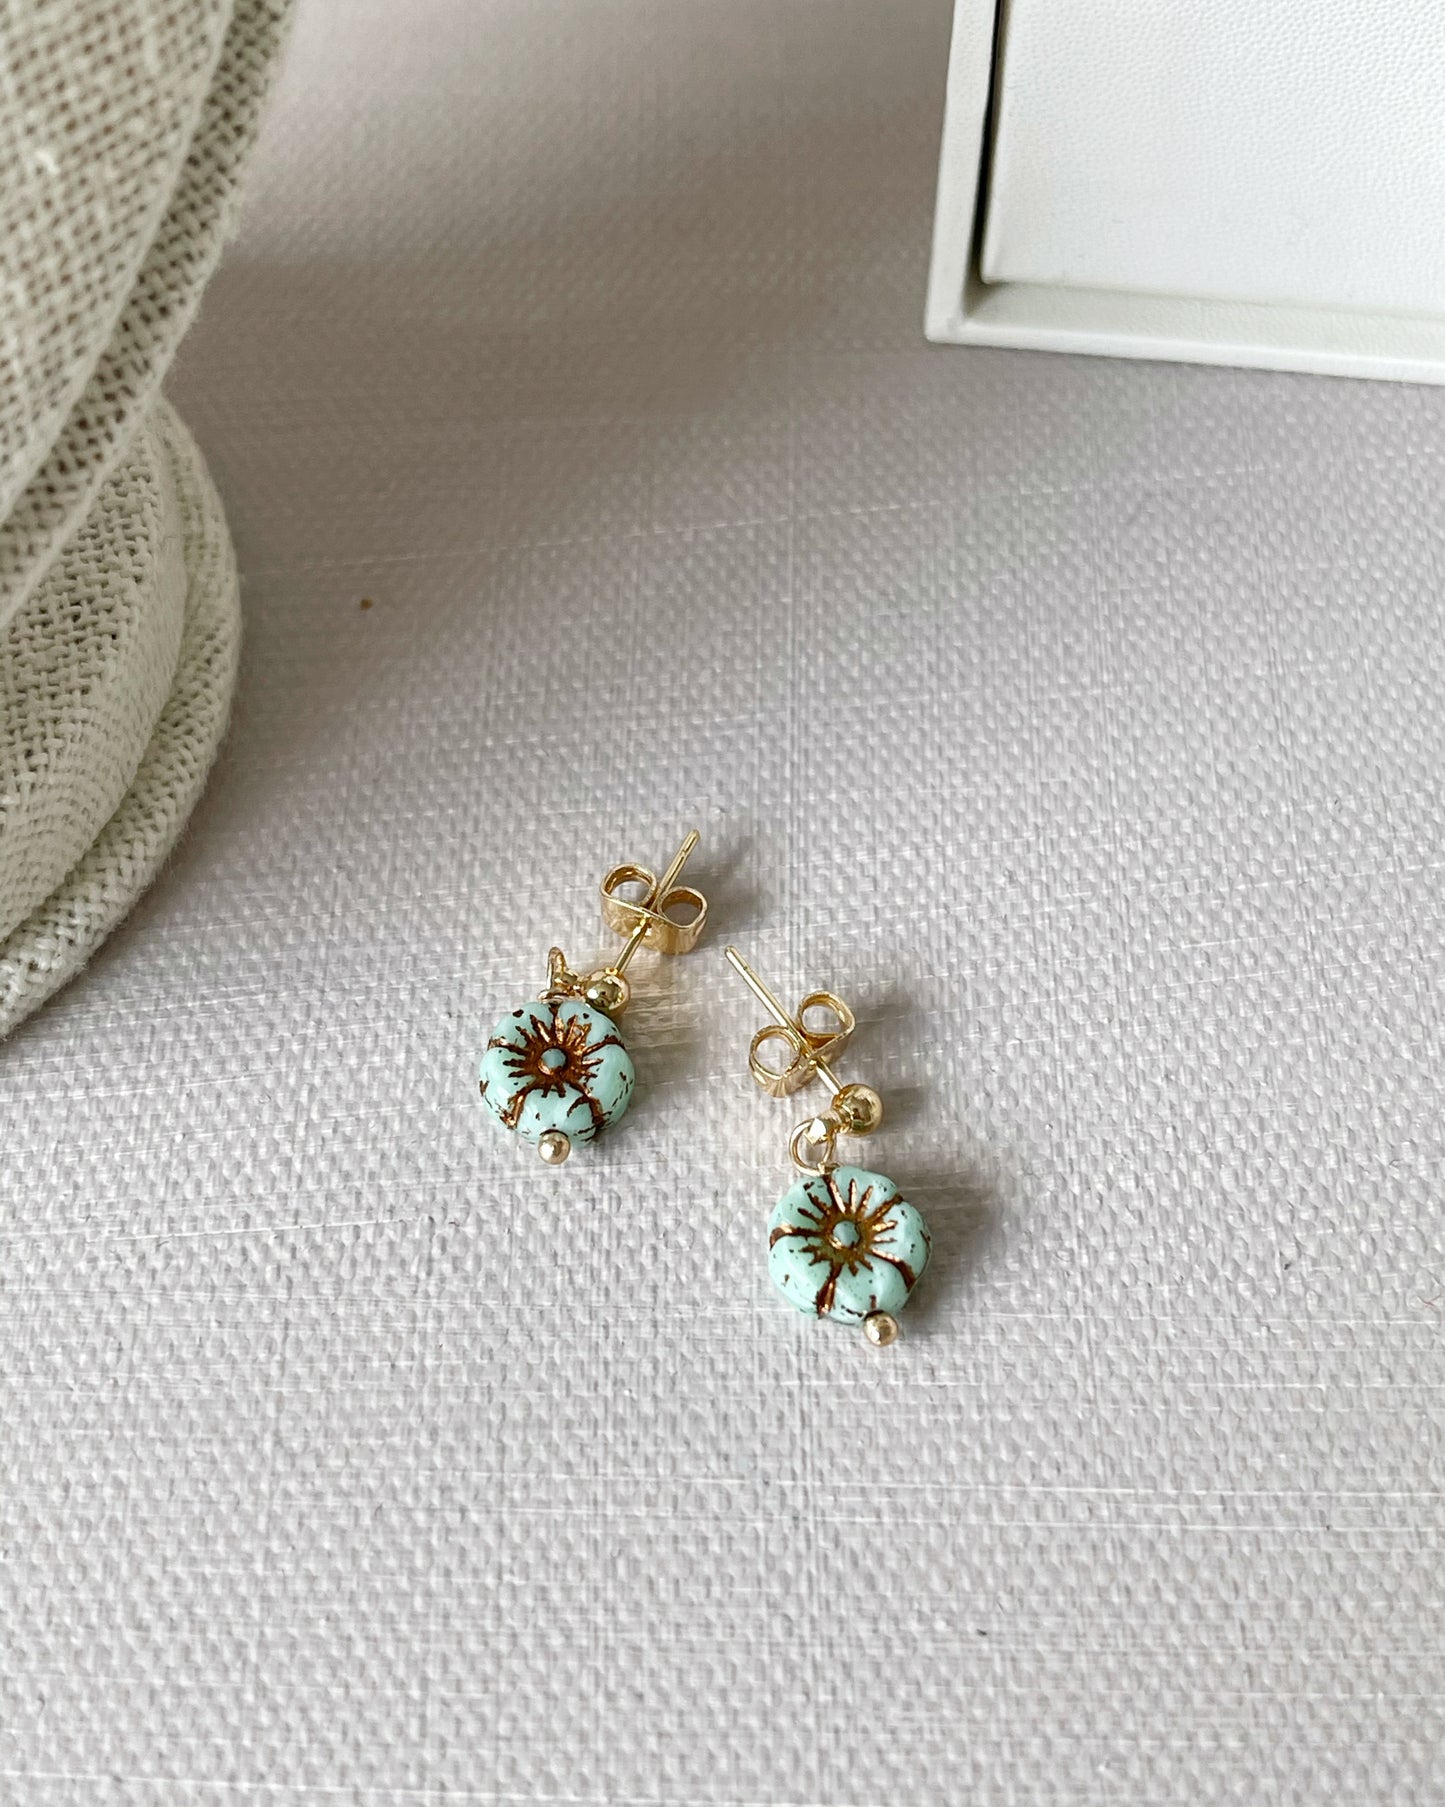 Mini sakura necklace and earrings set in aqua